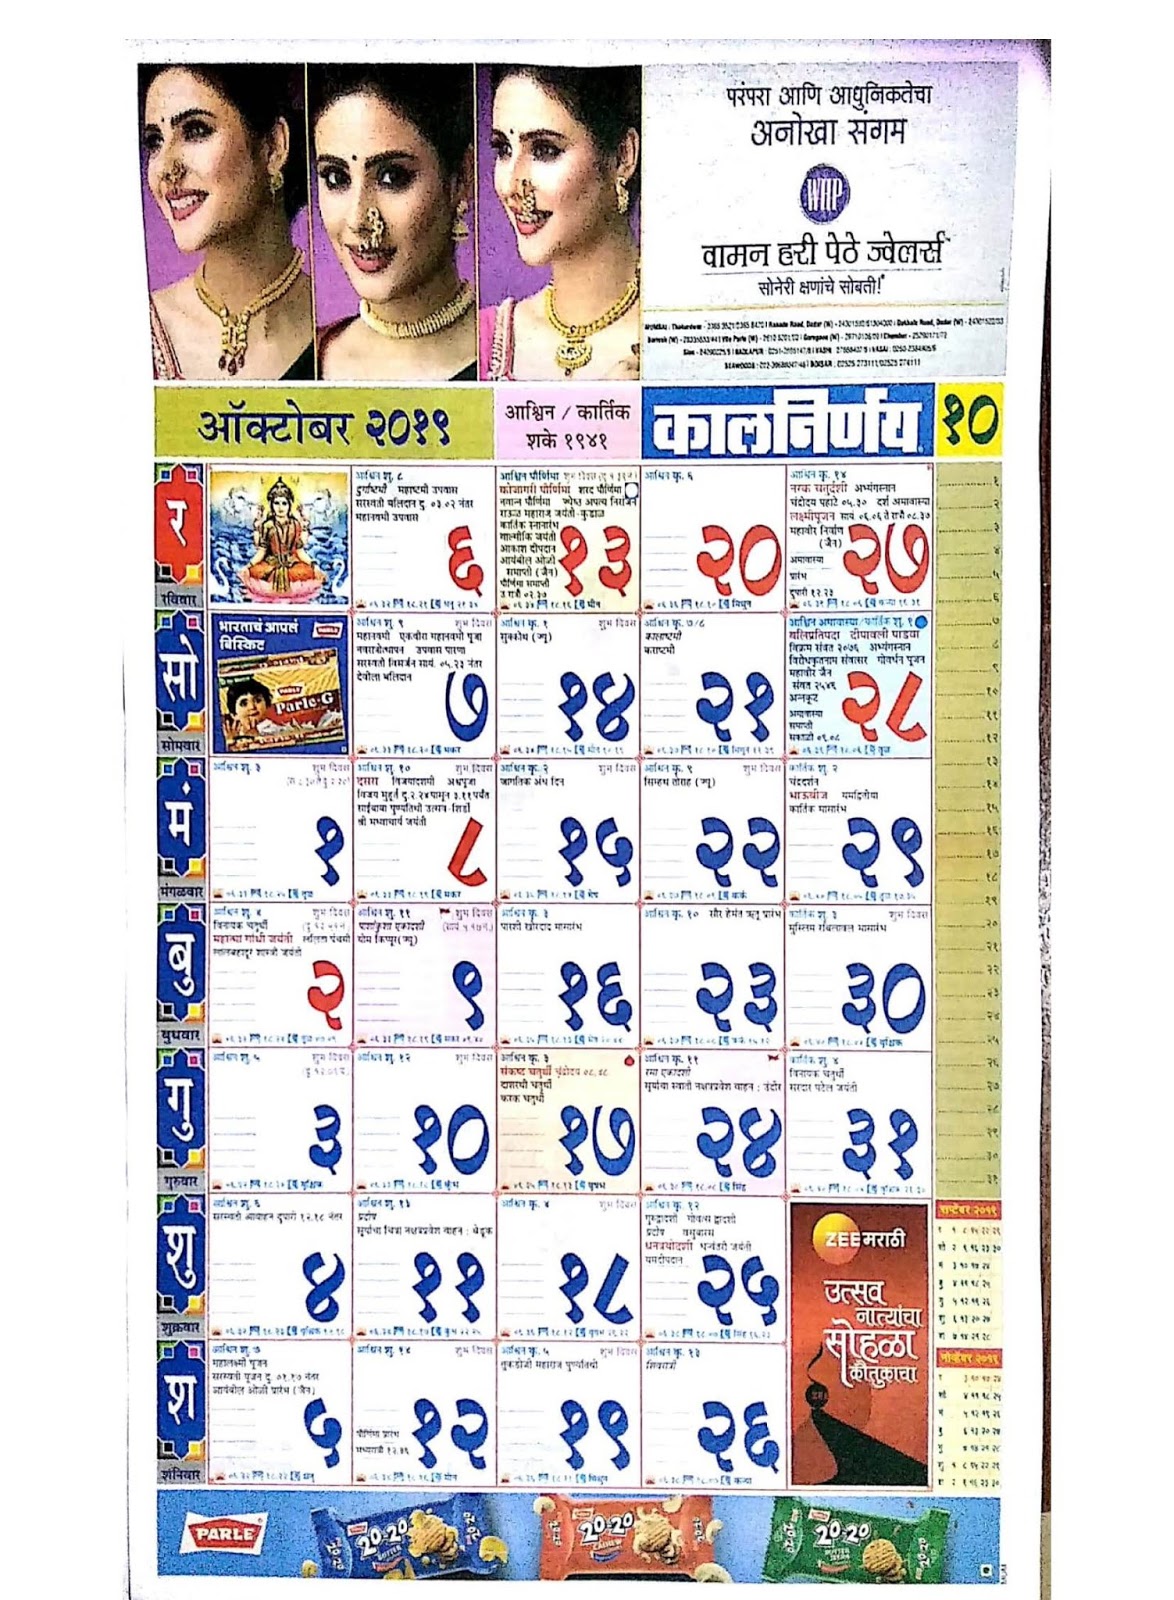 kalnirnay calendar 2019 marathi pdf